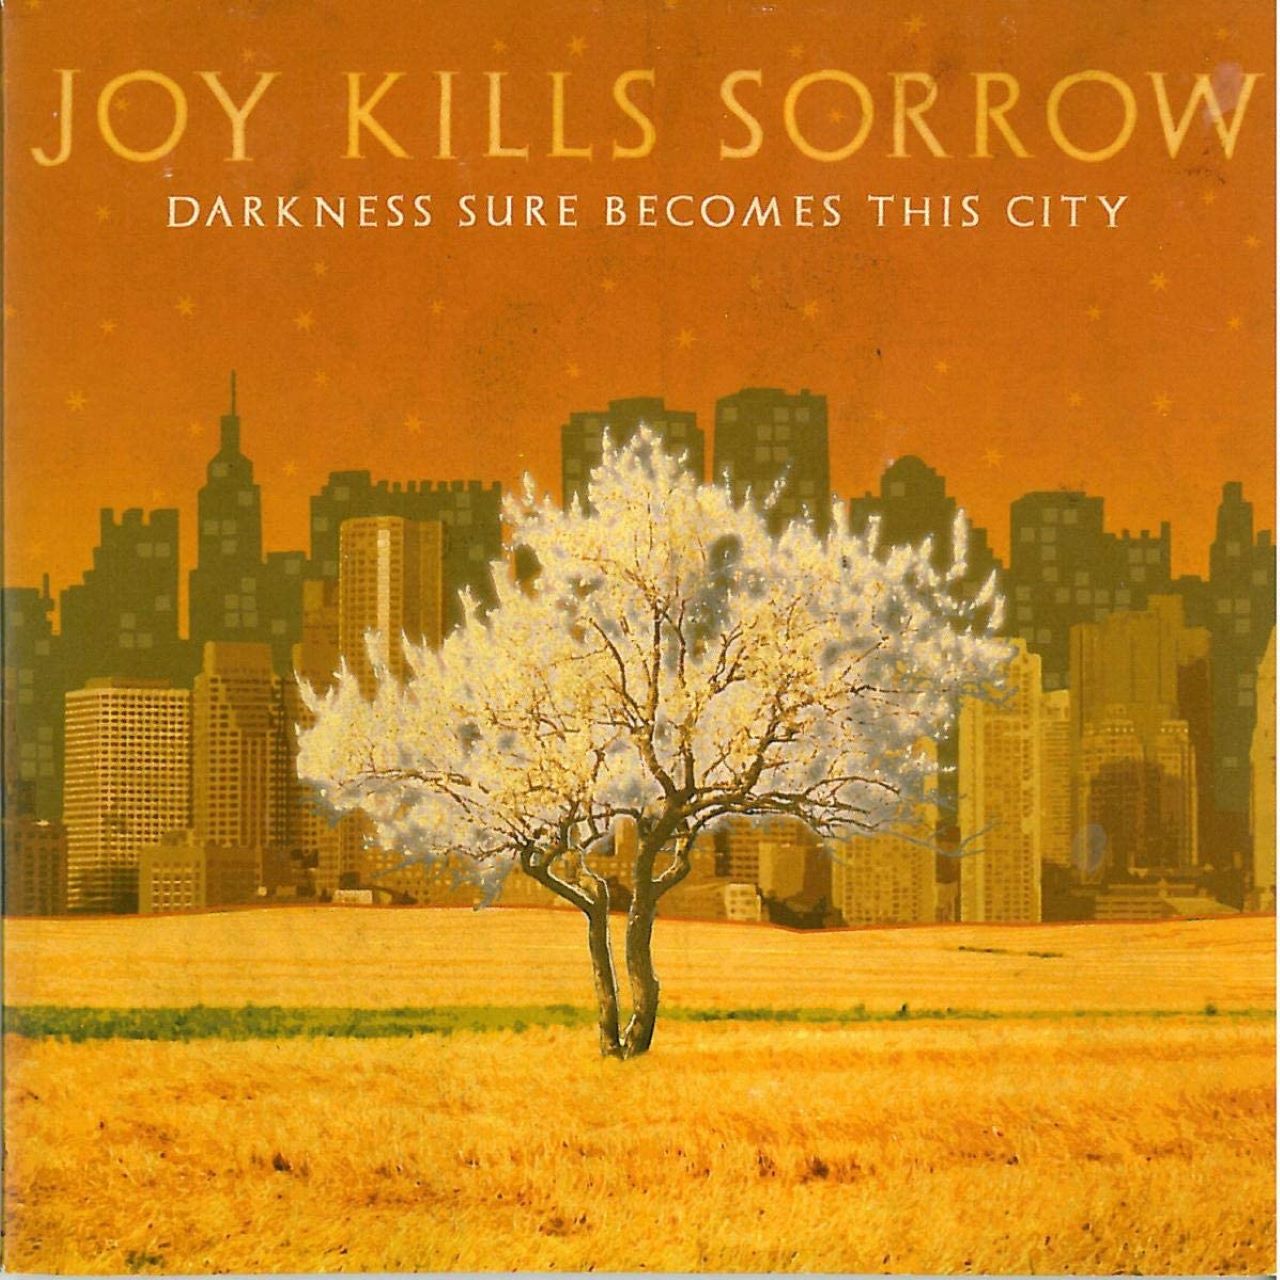 Joy Kills Sorrow - Darkness Sure Becomes This City cover album